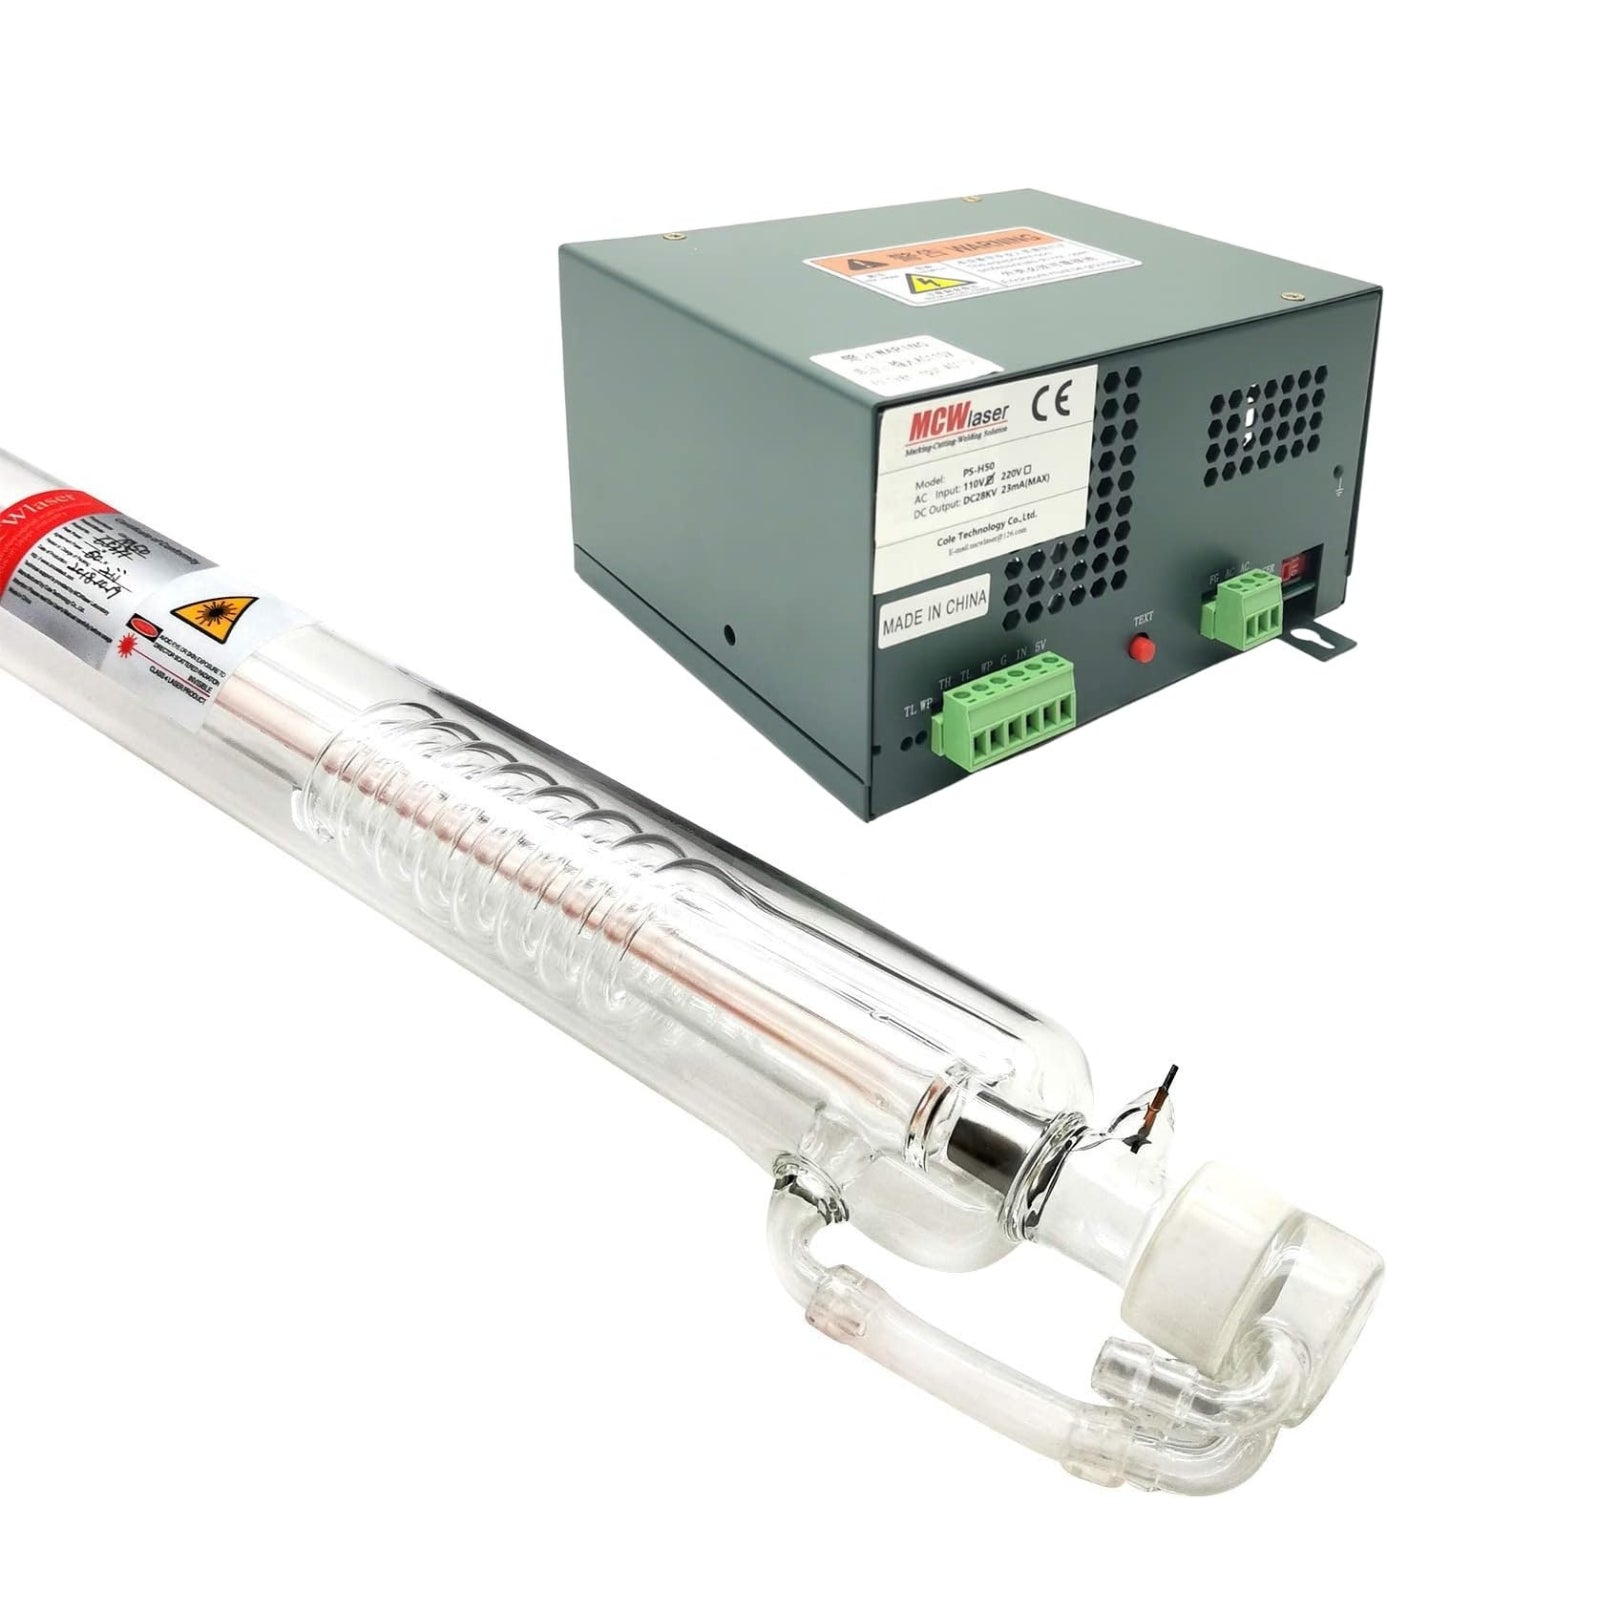 MCWlaser 80W(Peak 100W)1250mm CO2 Laser Tube +80W 110V/220V Power Supply With LED Display